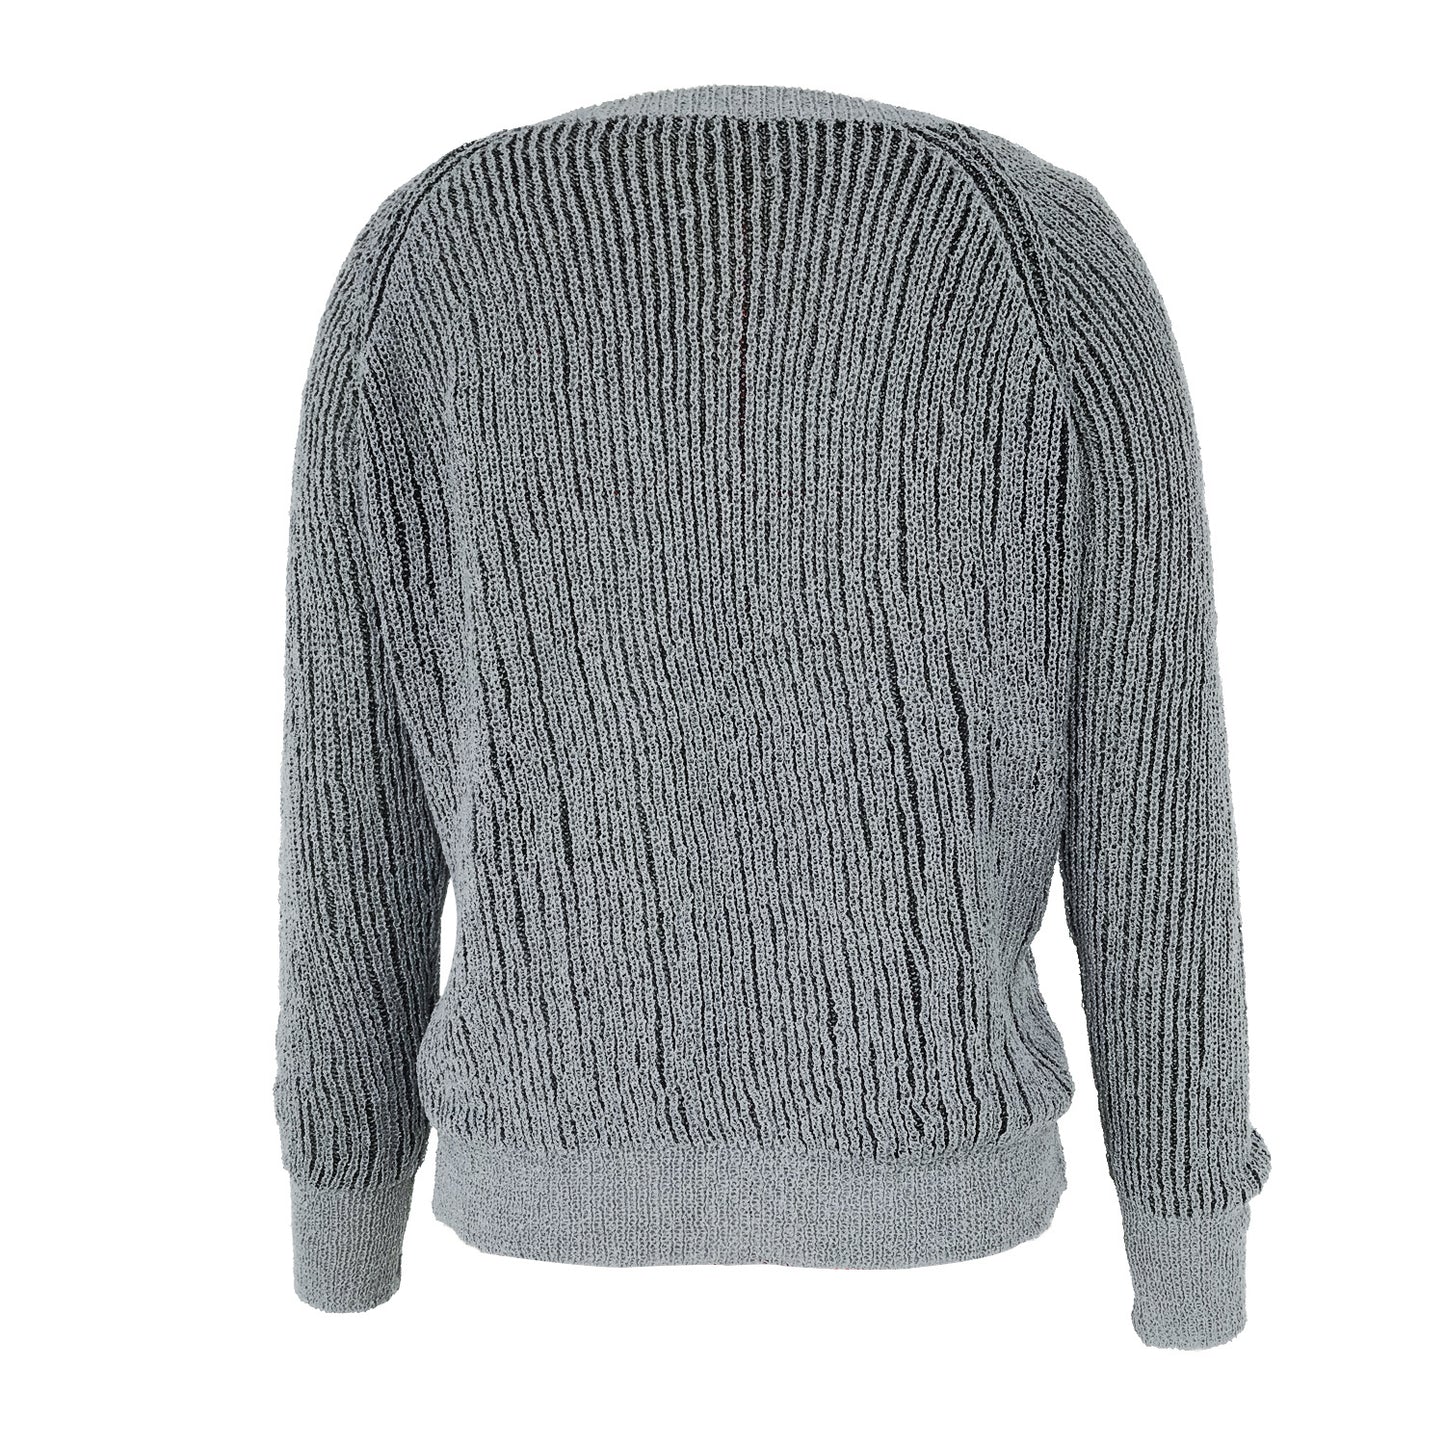 Knit sweater pullover sweater women autumn and winter - ladieskits - 0